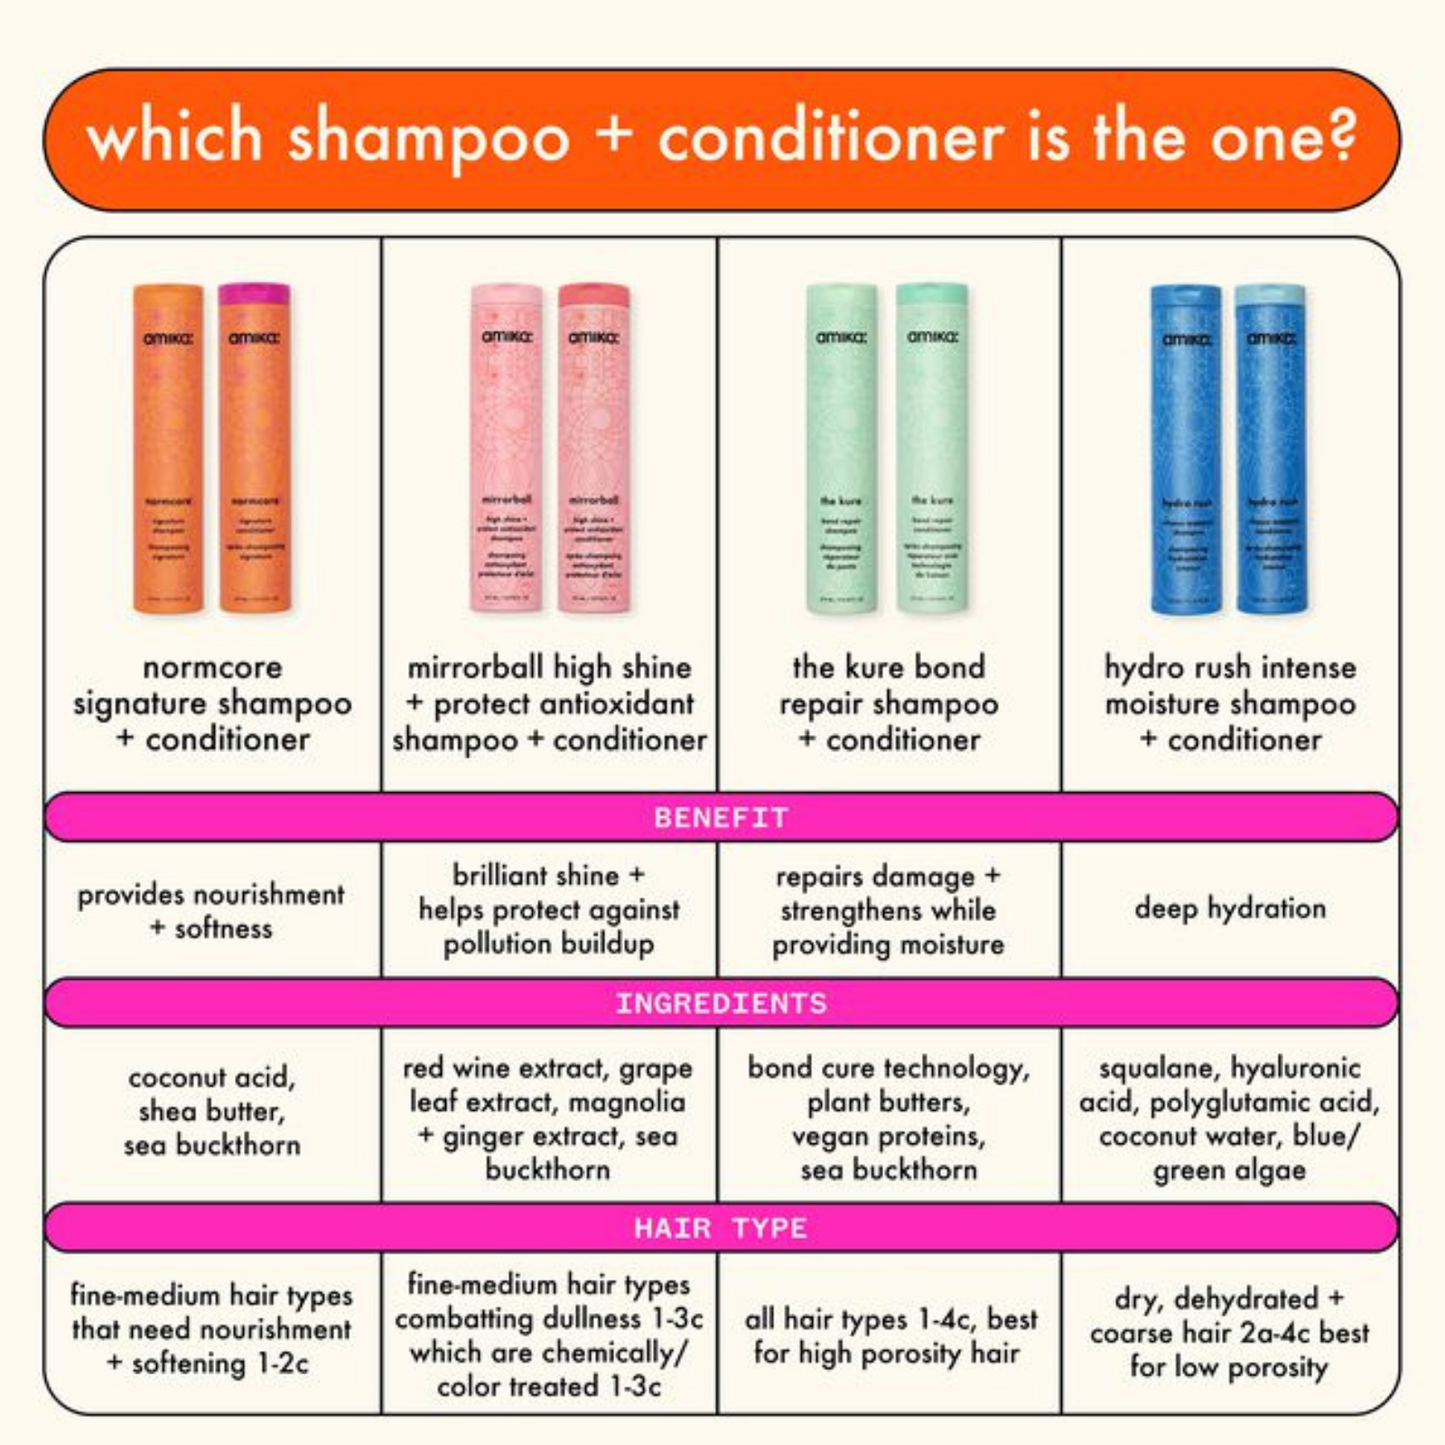 amika - Normcore Signature Shampoo